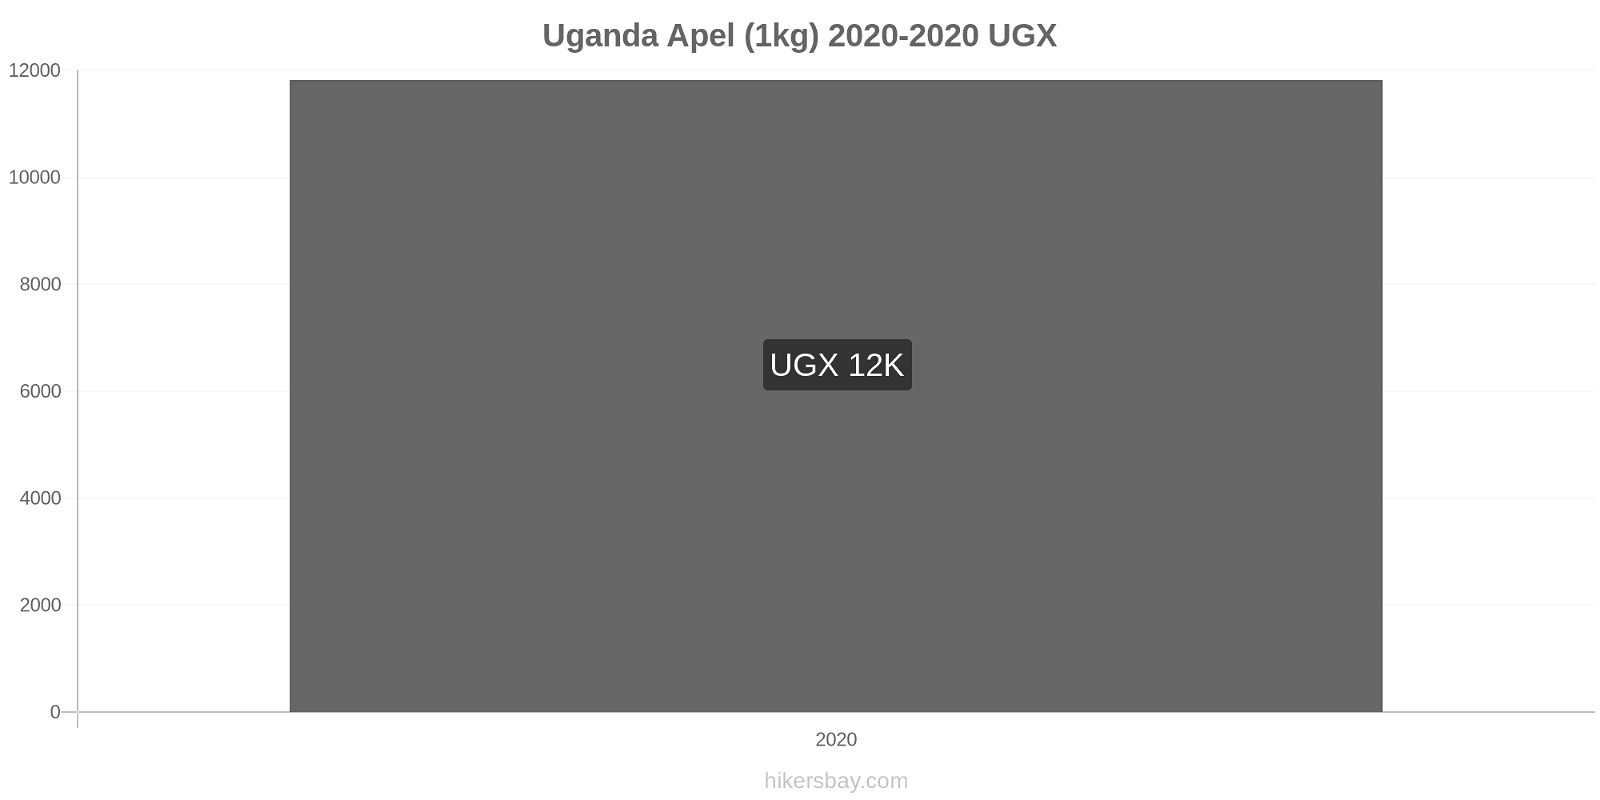 Uganda perubahan harga Apel (1kg) hikersbay.com